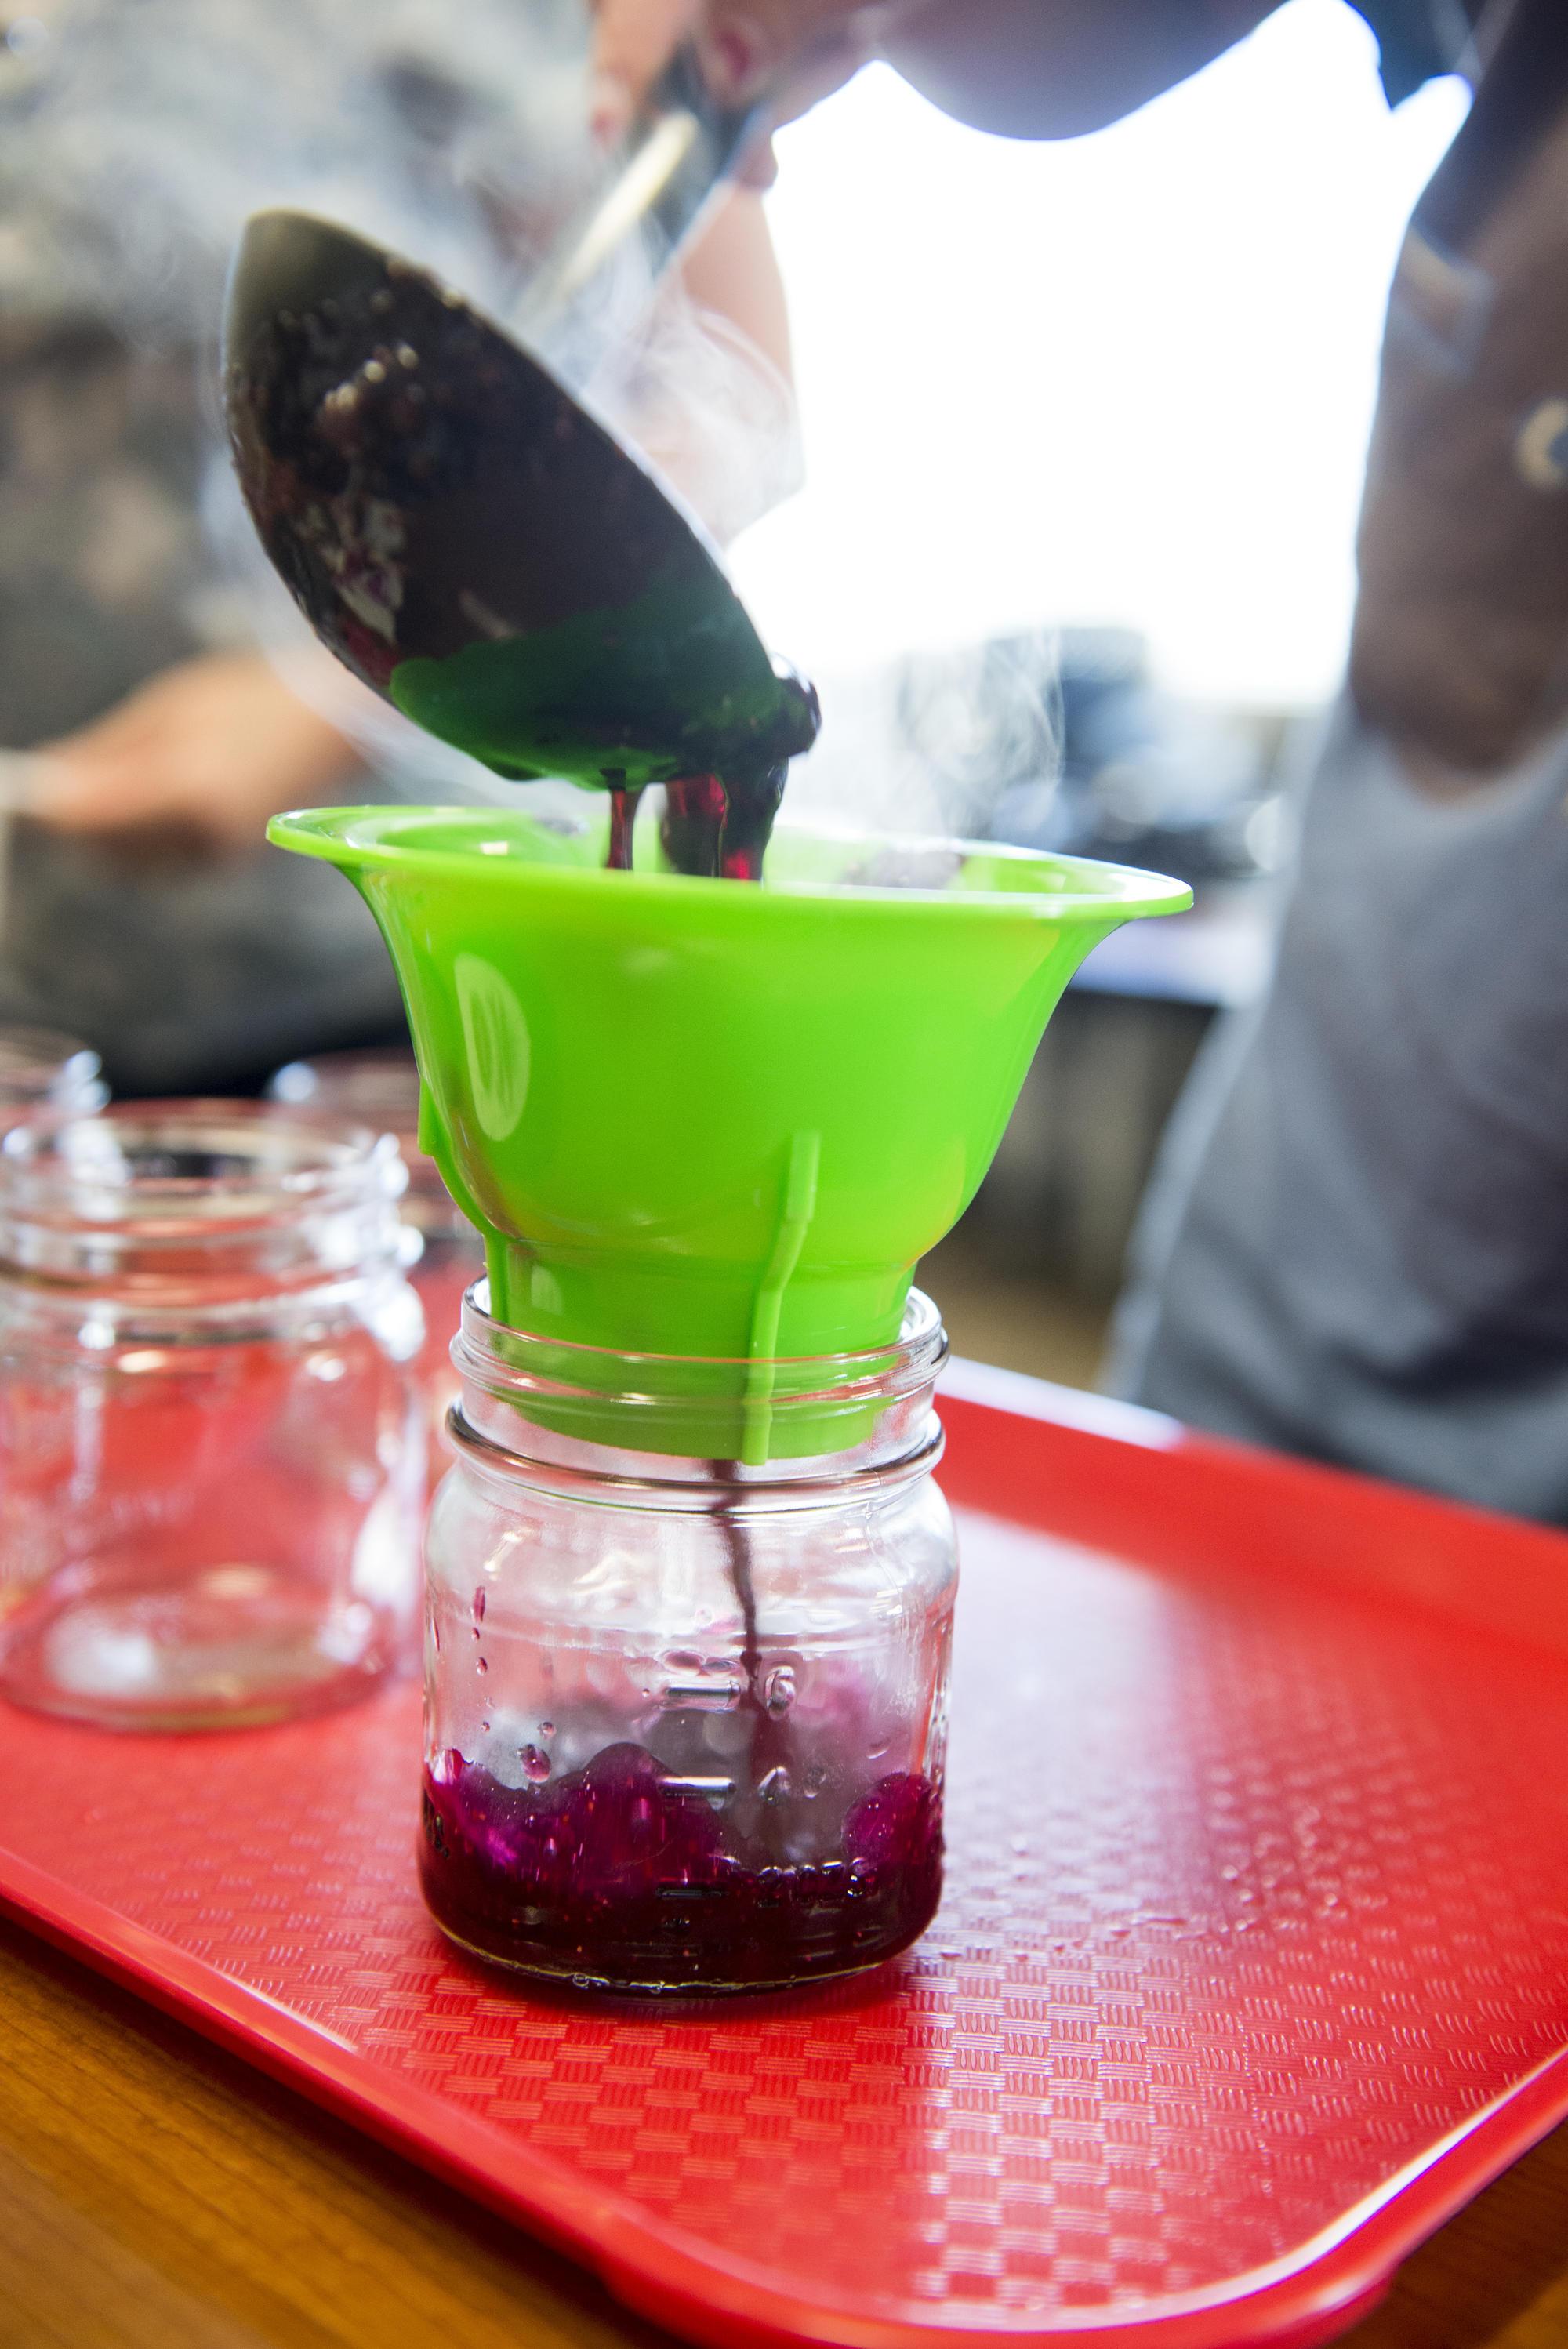 Filling a jelly jar